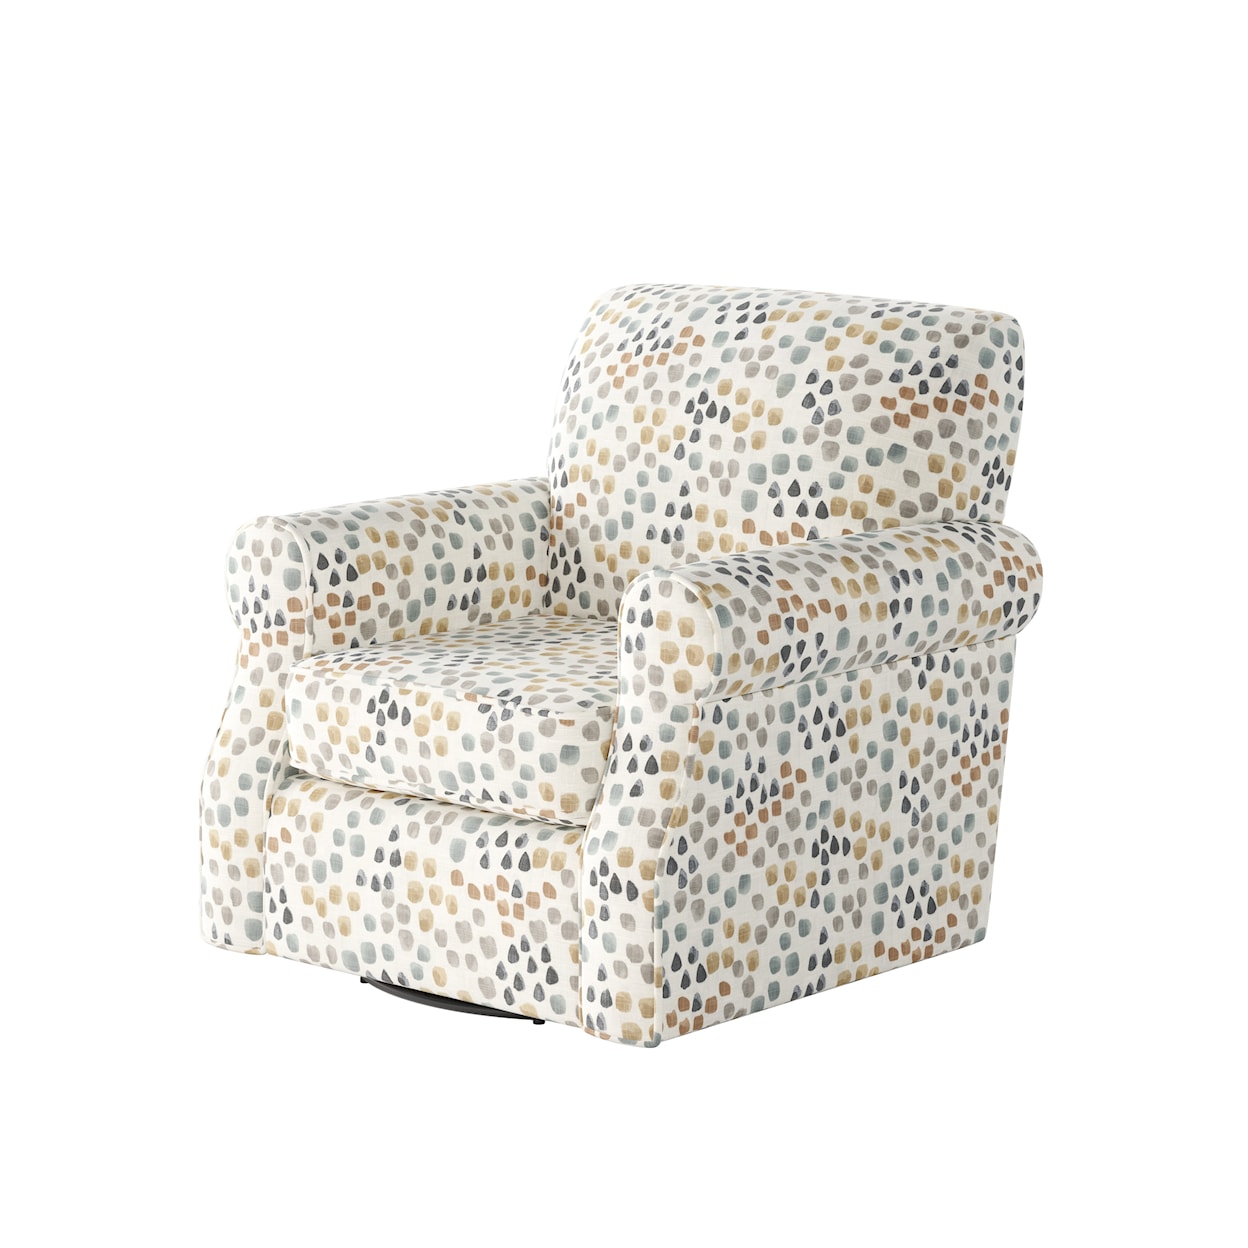 Fusion Furniture Grab A Seat Swivel Chair